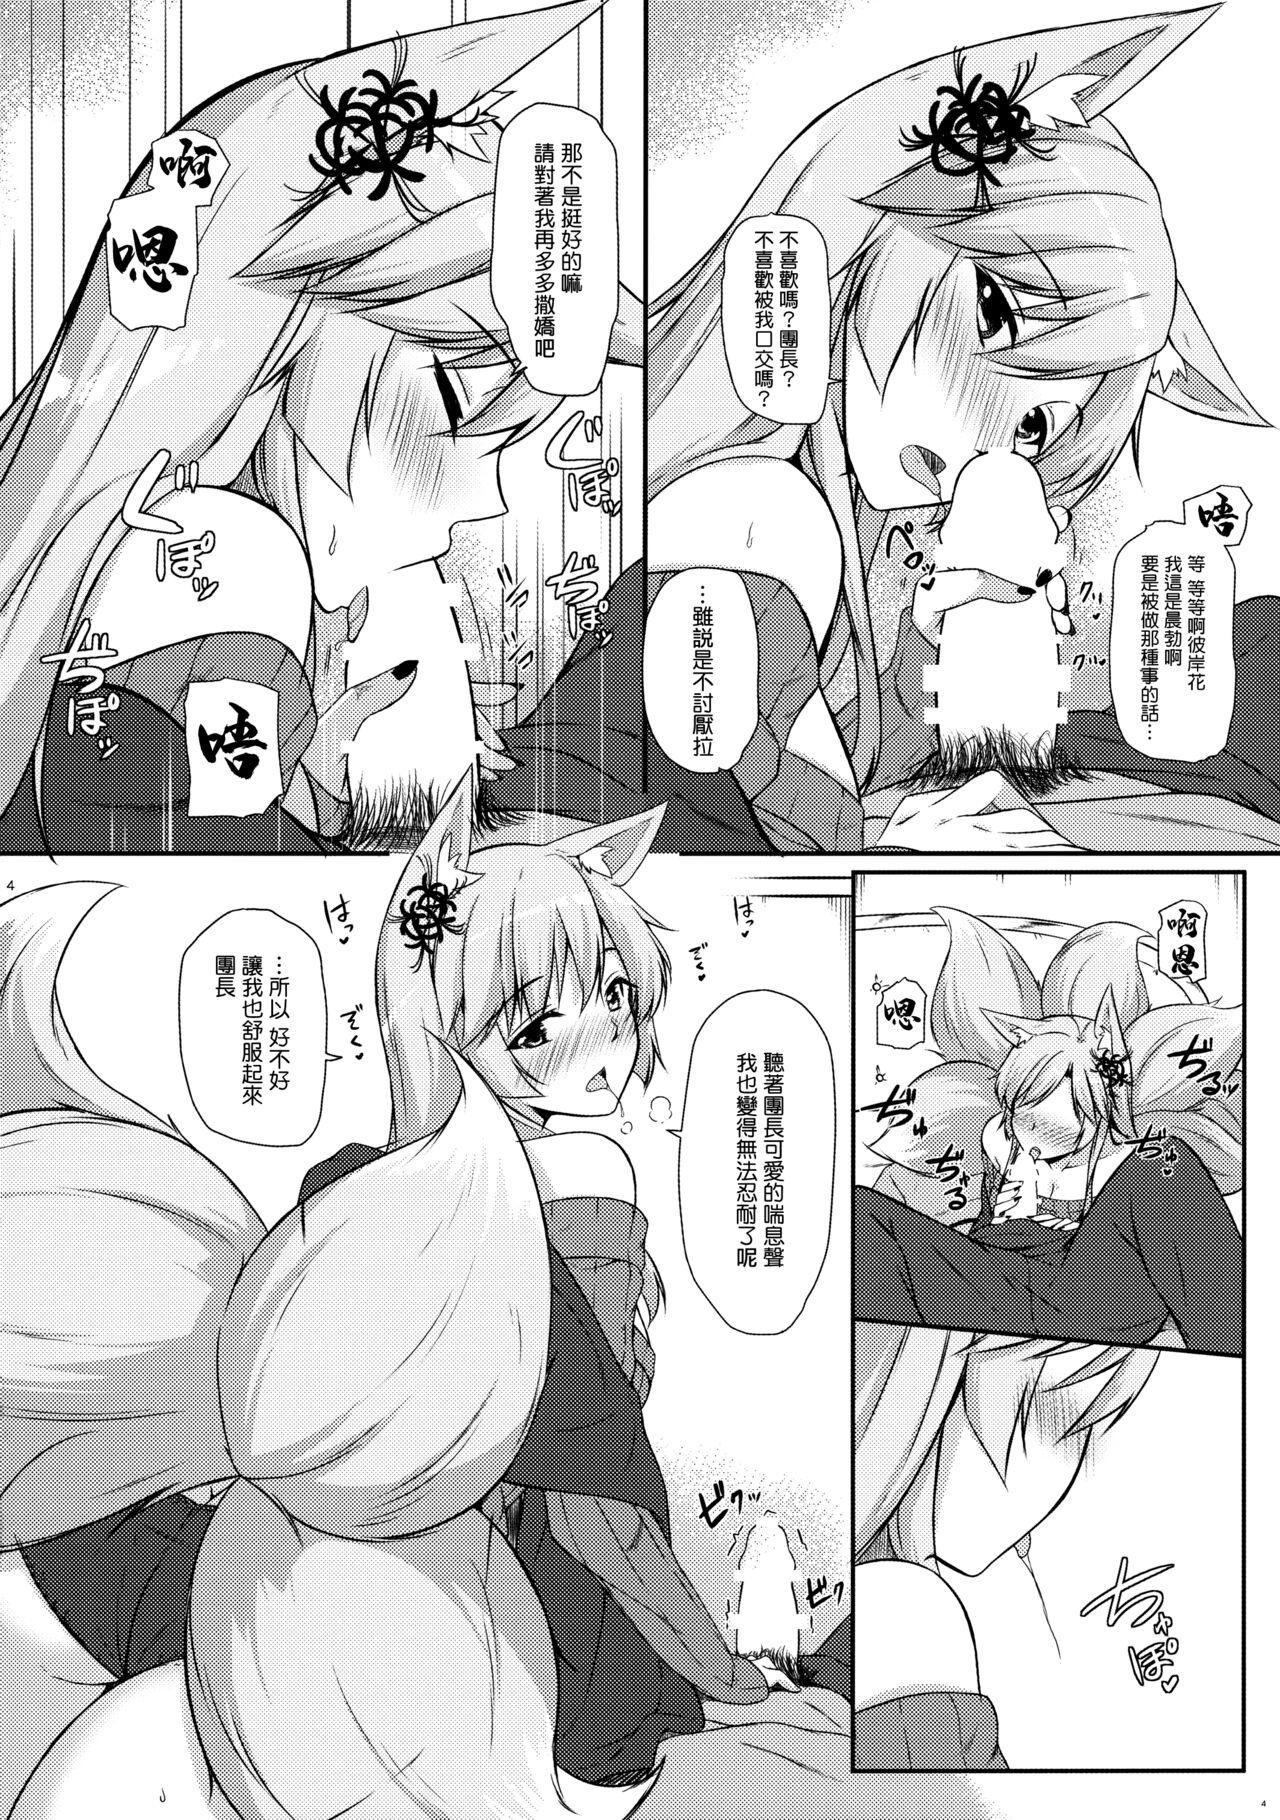 Secret Kitsune hana - Flower knight girl Party - Page 5